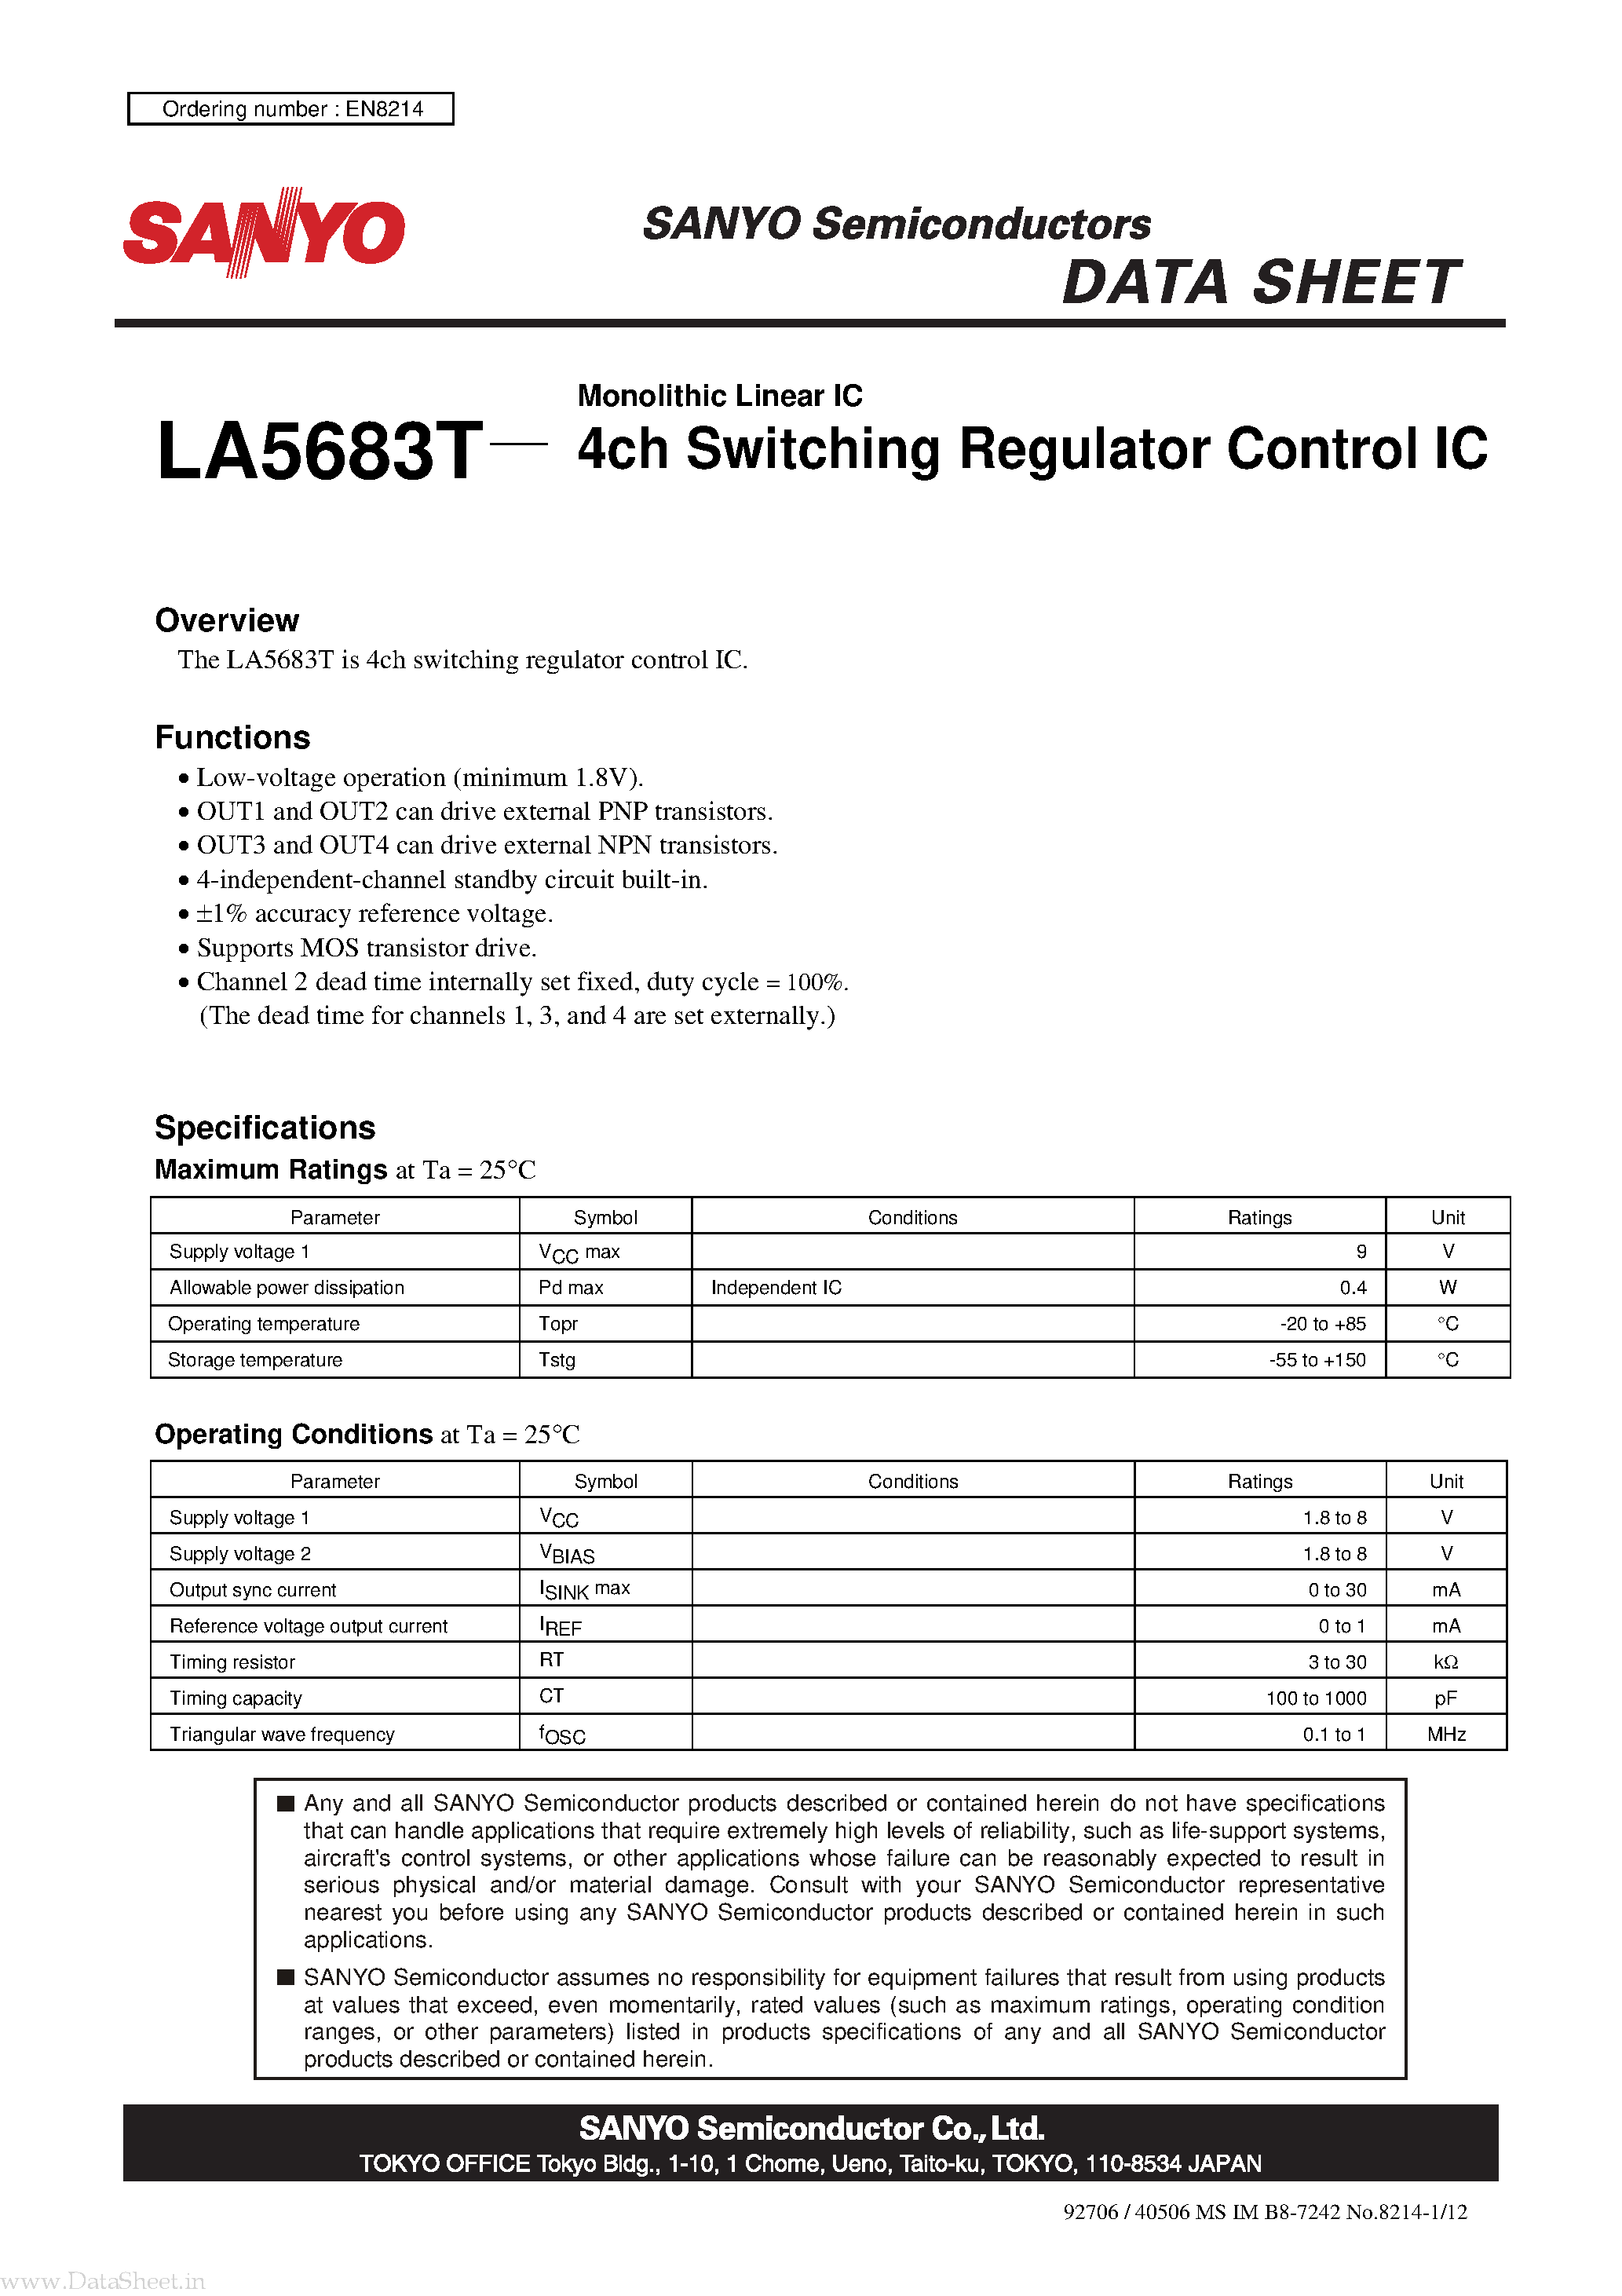 Datasheet LA5683T - Monolithic Linear IC 4ch Switching Regulator Control IC page 1